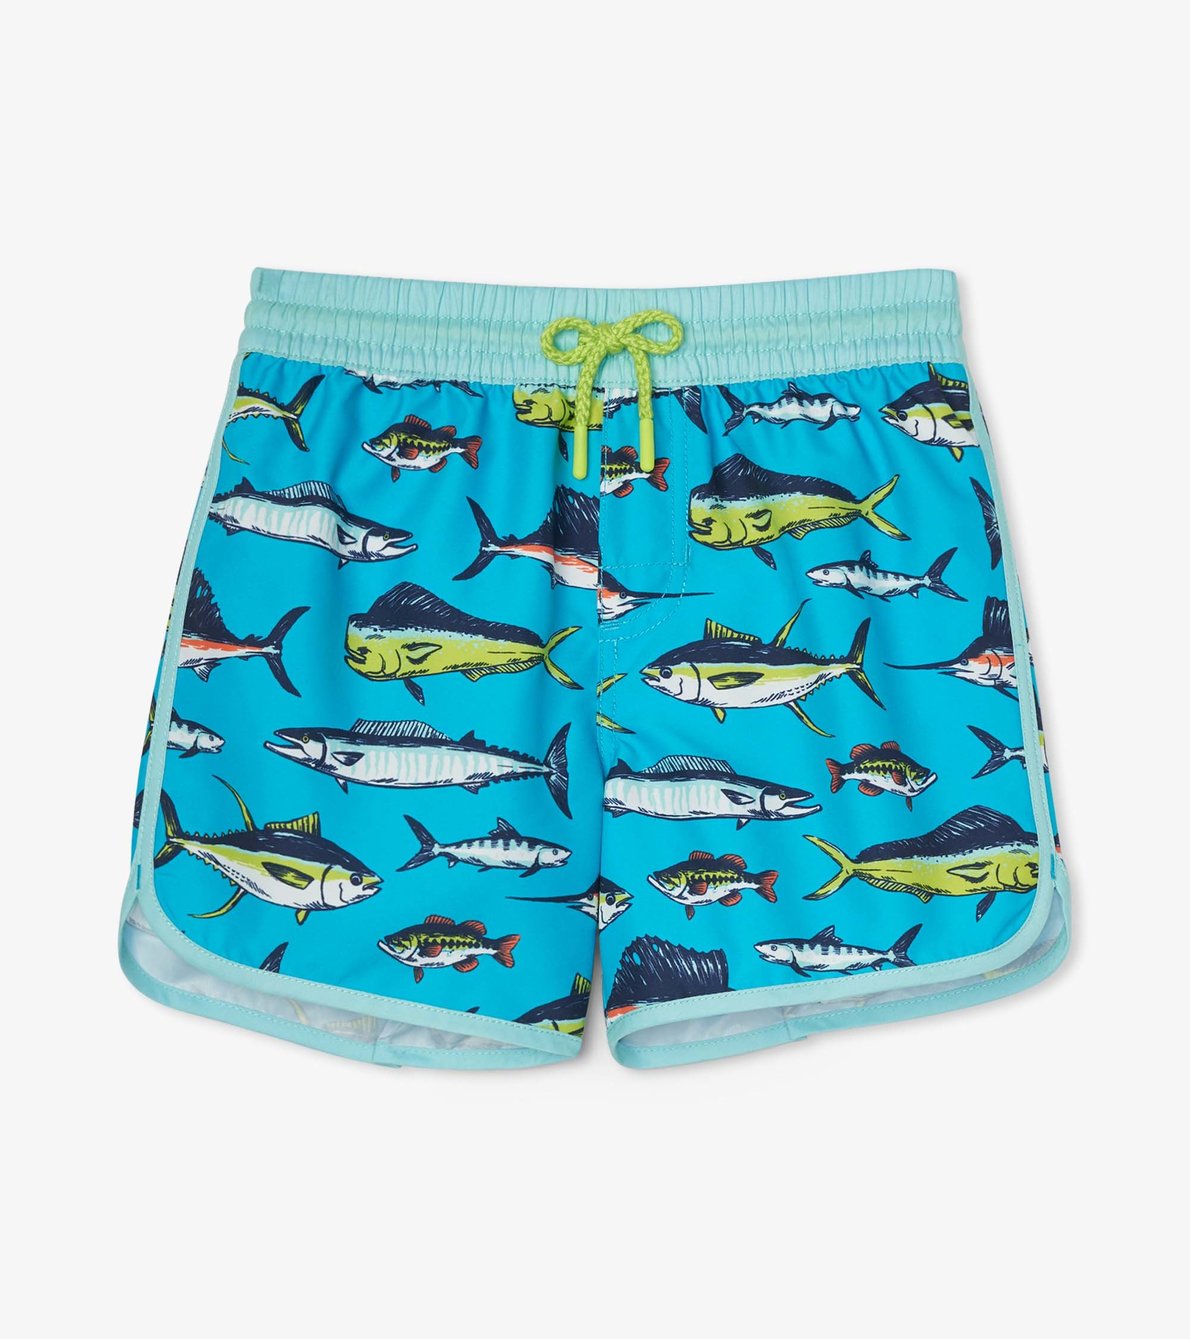 View larger image of Cool Fish Swim Shorts